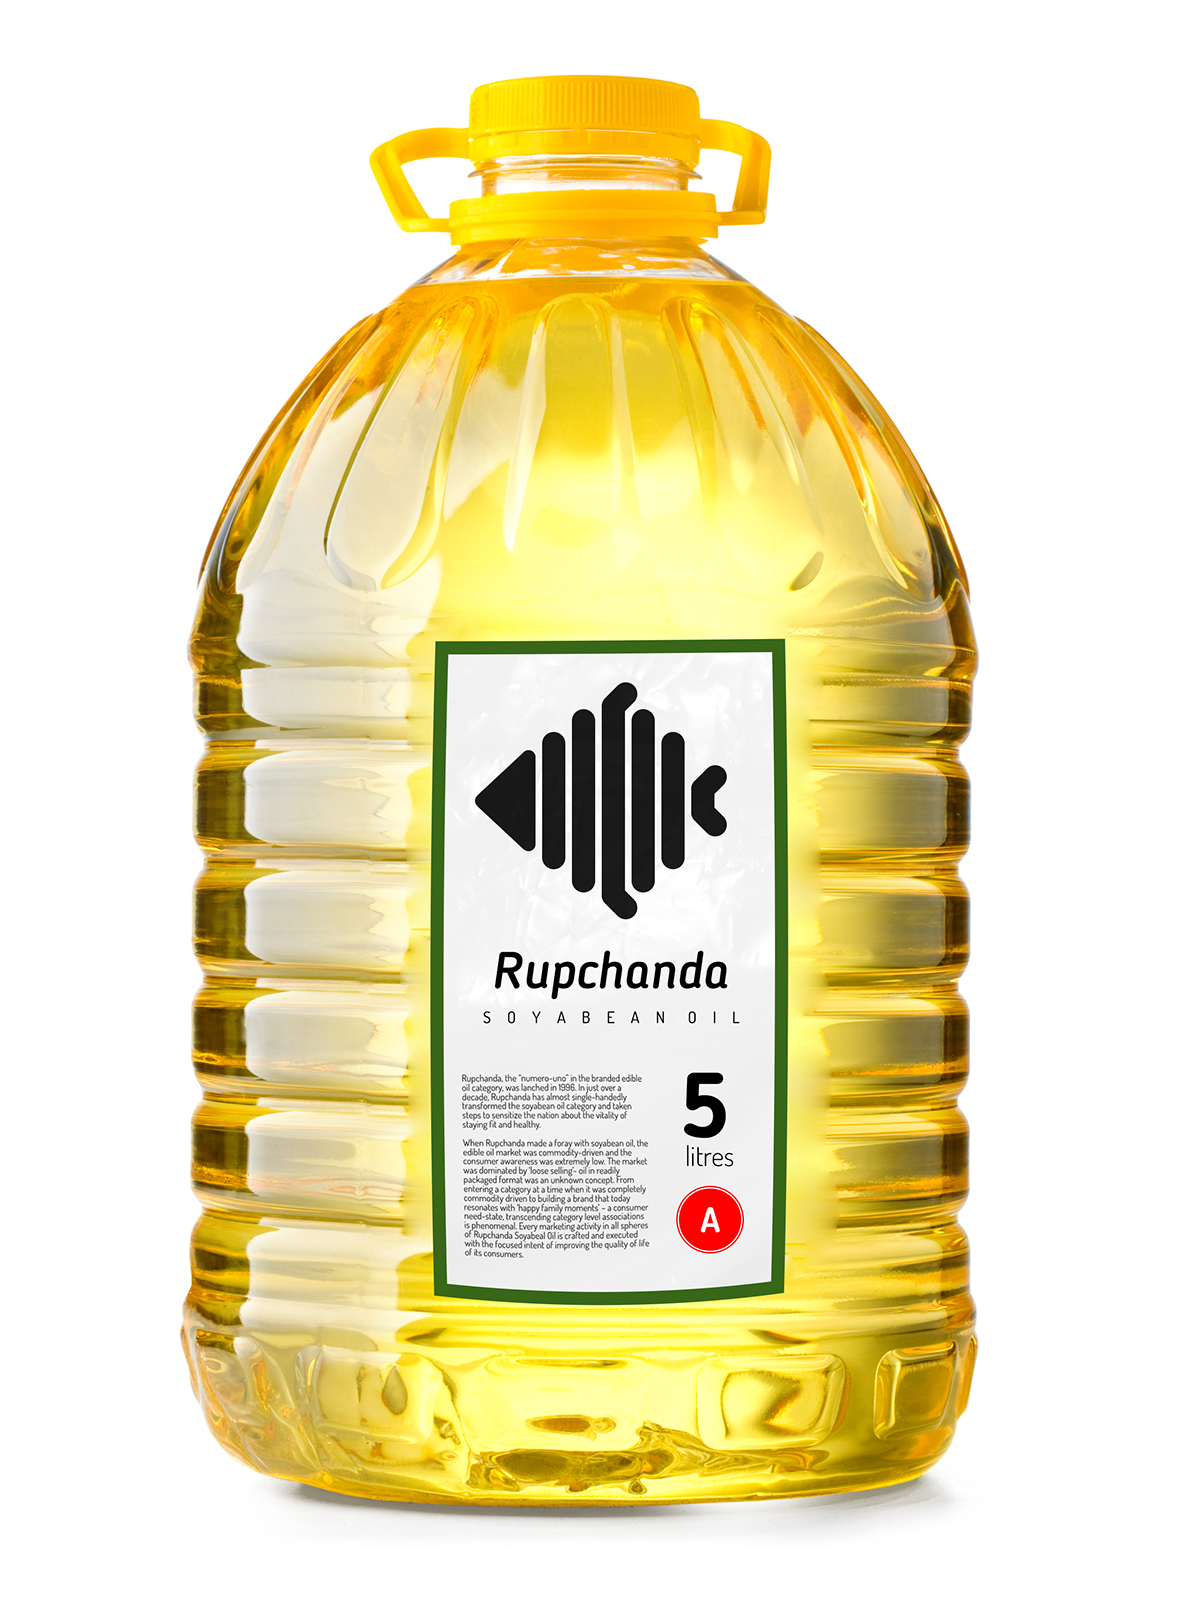 Rupchanda soyabean oil rebranding Project personal product fish logo minimal modern animated process Mockup bottle